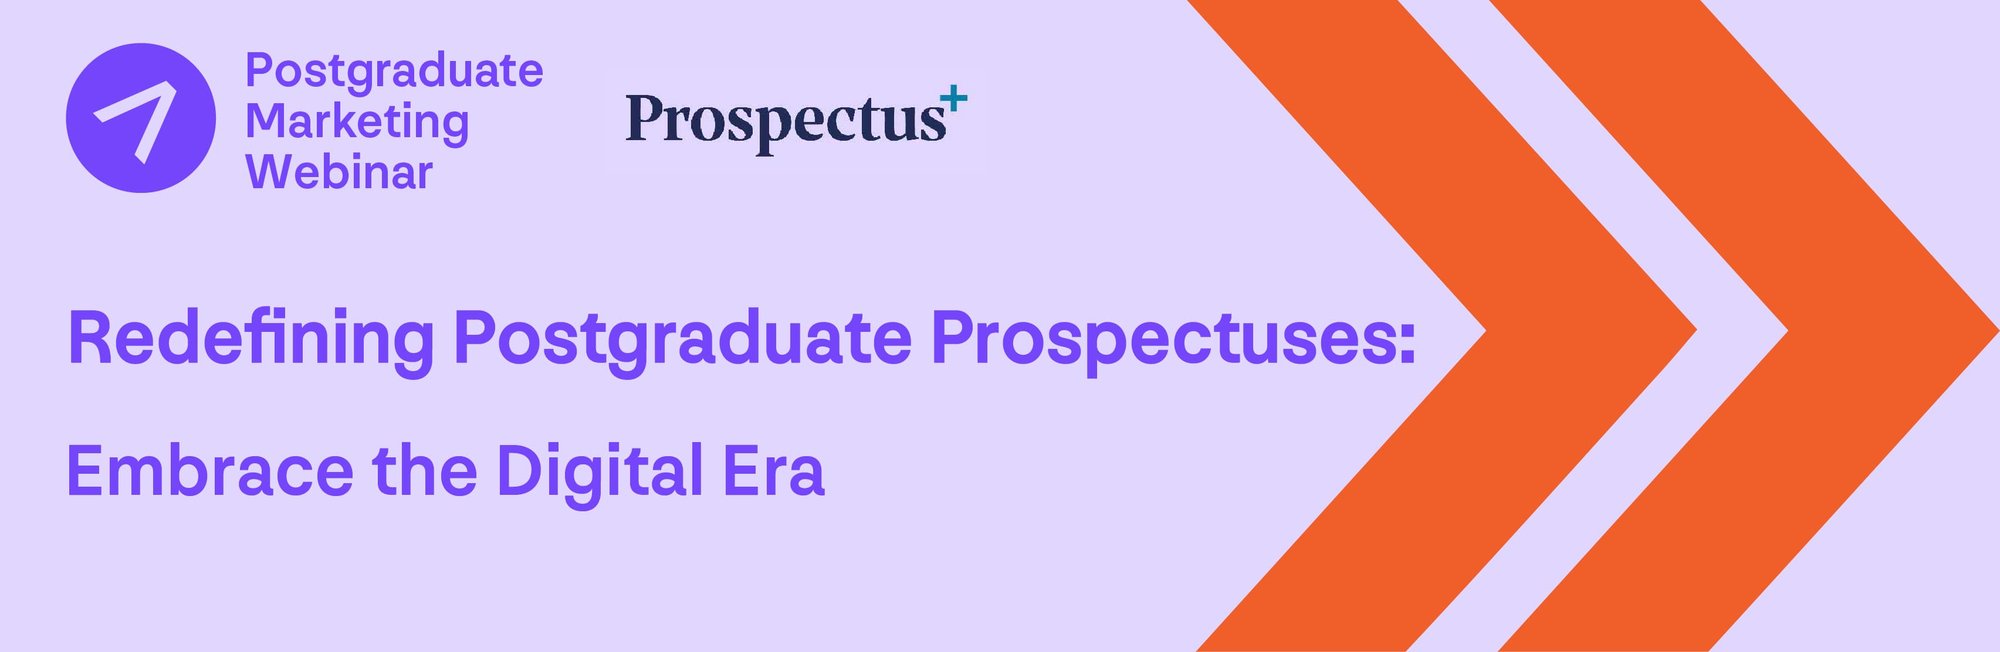 June 23 Webinar Redefining Postgraduate Prospectuses: Embrace the Digital Era